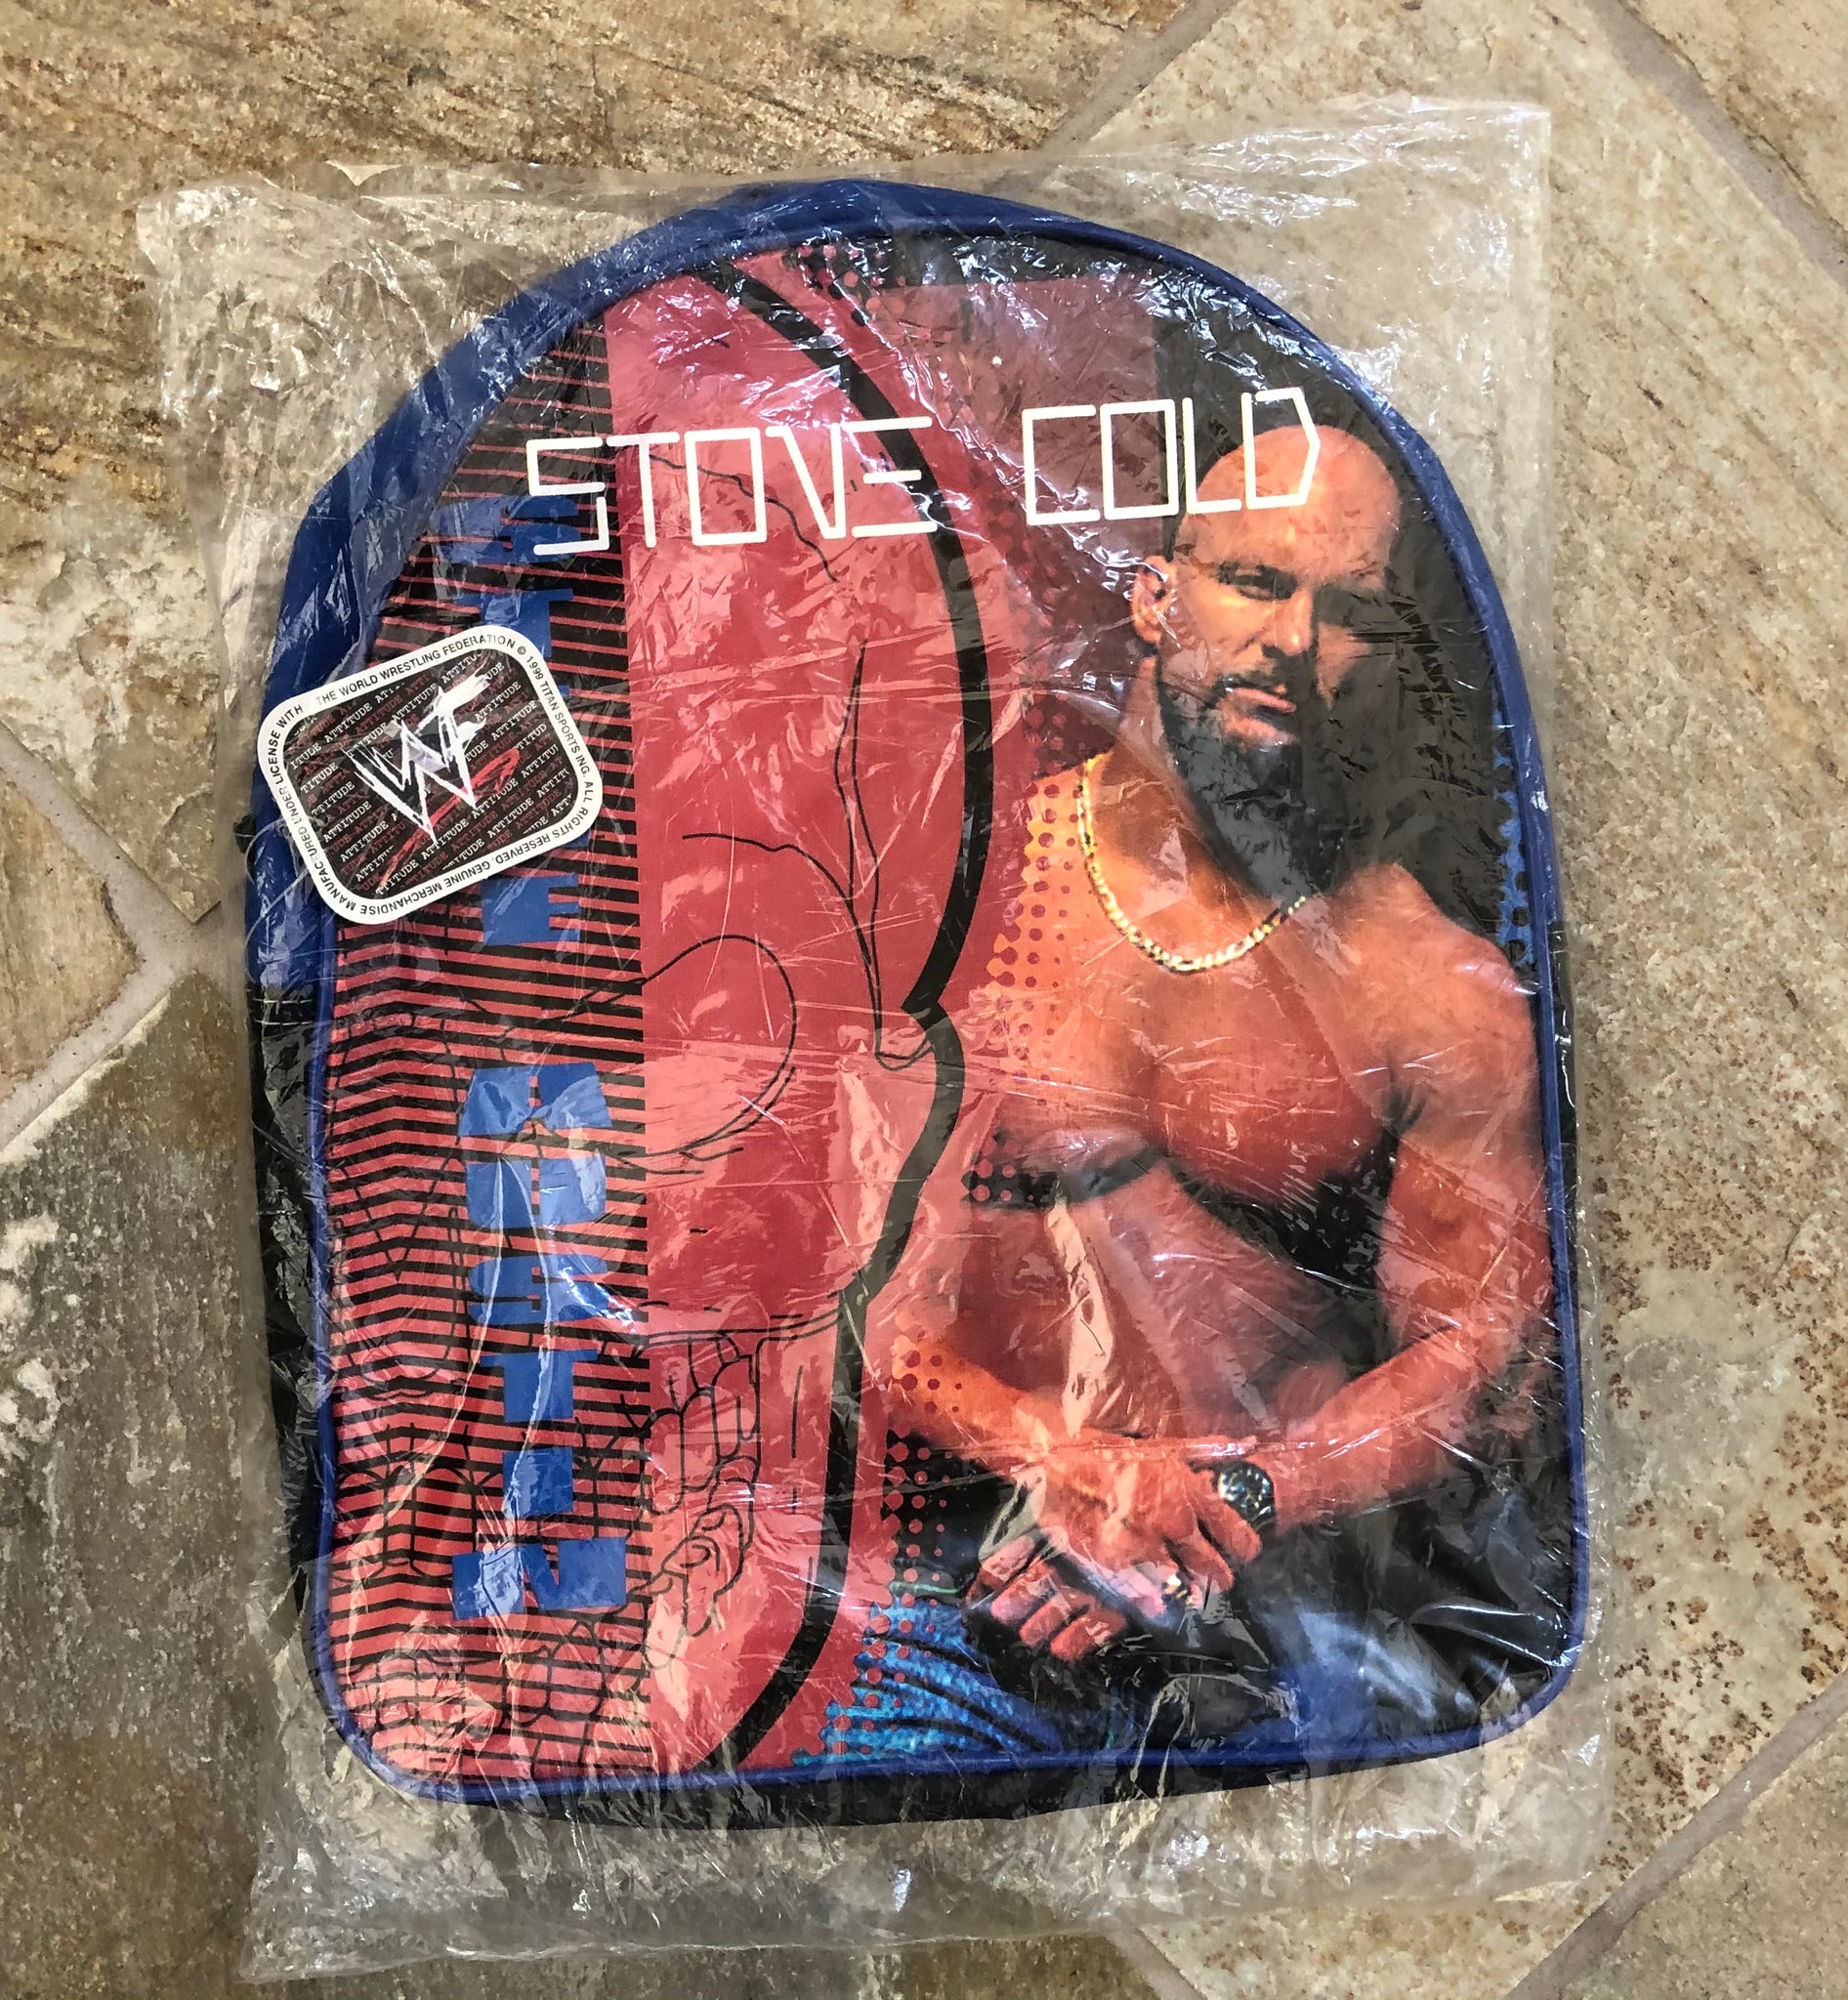 Vintage Stone Cold Steve Austin WWF WWE Backpack ### – Stuck In